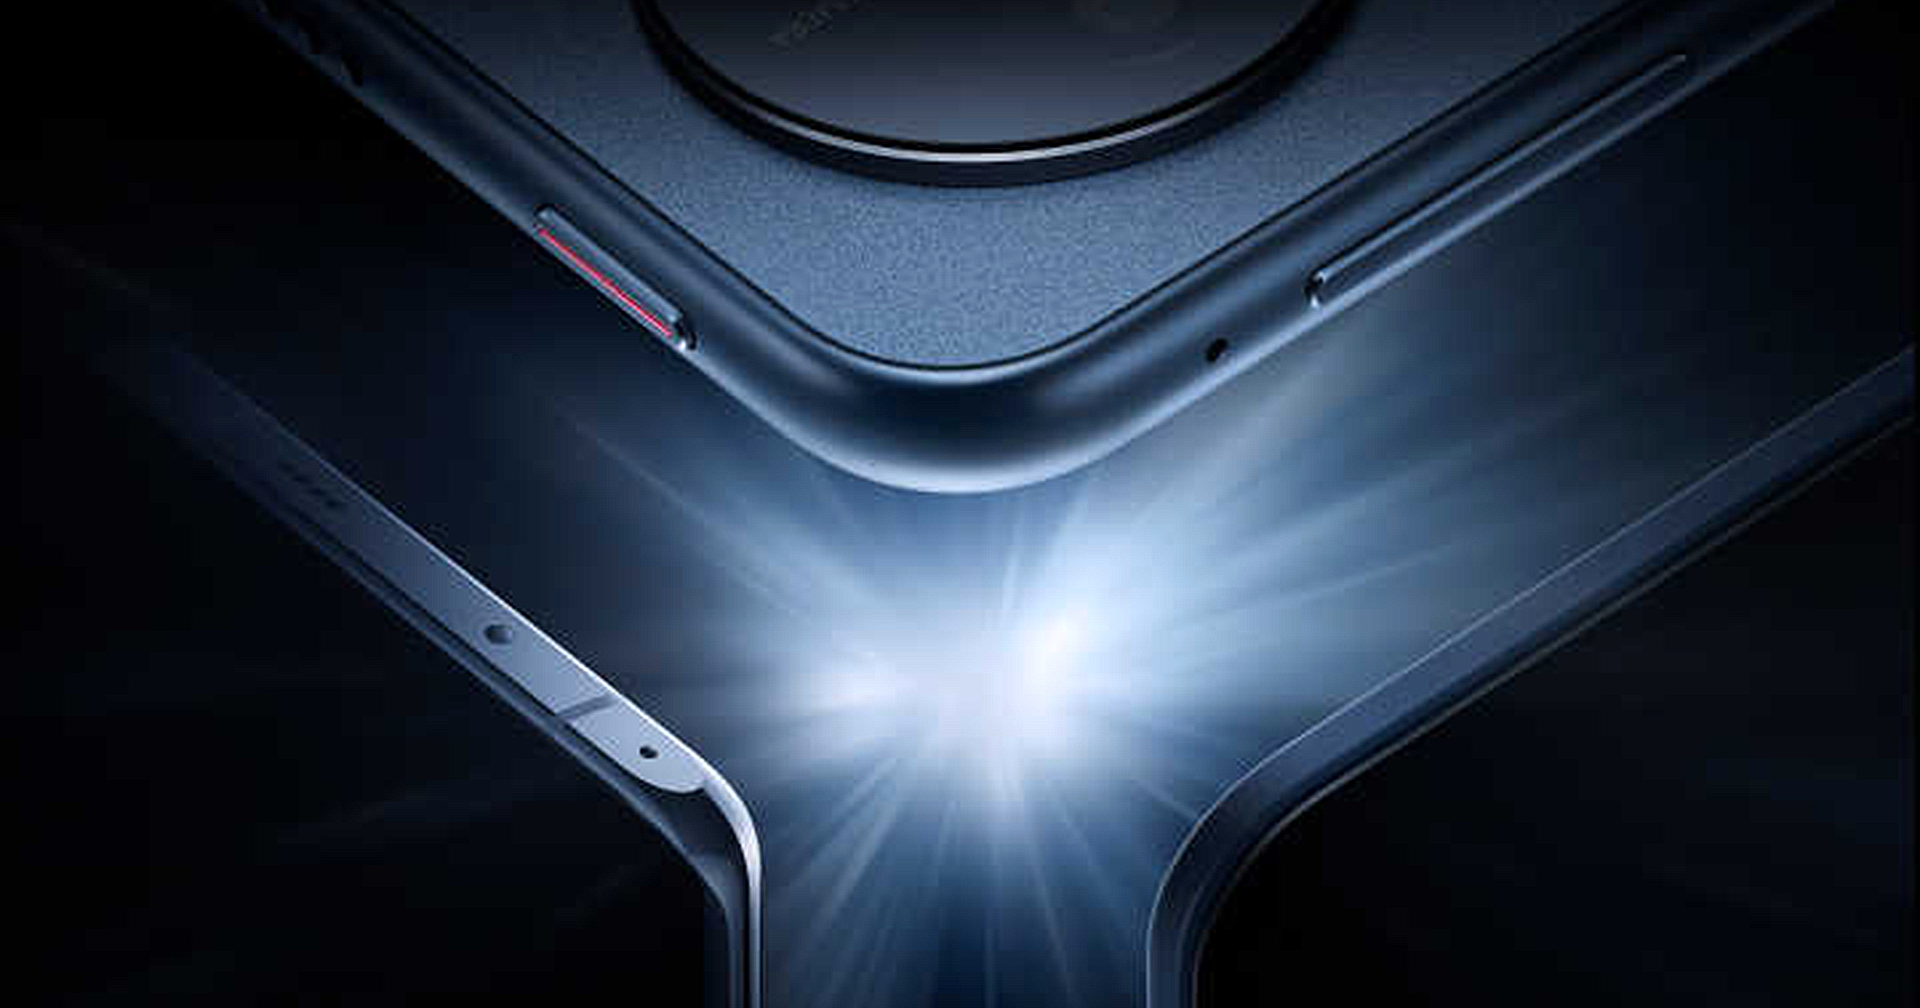 Huawei เตรียมเปิดตัวแท็บเล็ตเรือธง MatePad Pro ในวันที่ 27 ก.ค. นี้